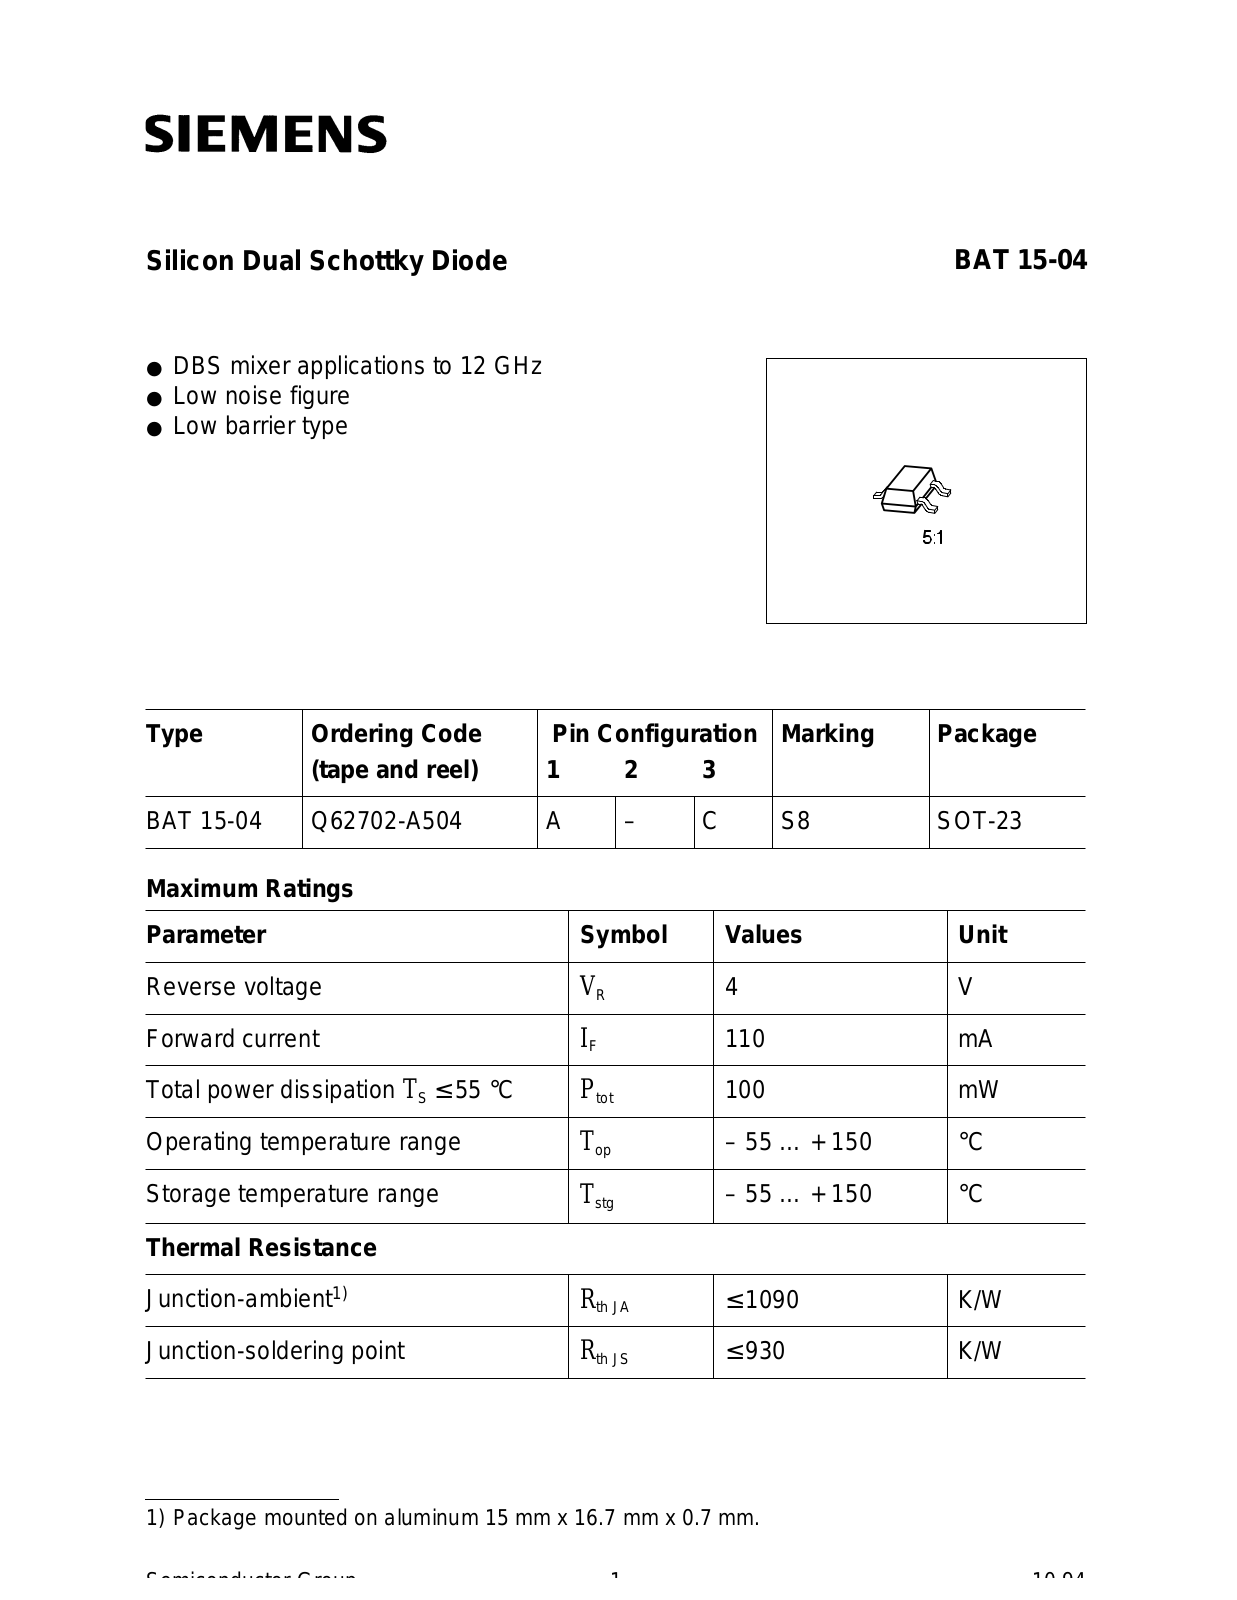 Siemens BAT15-04 Datasheet